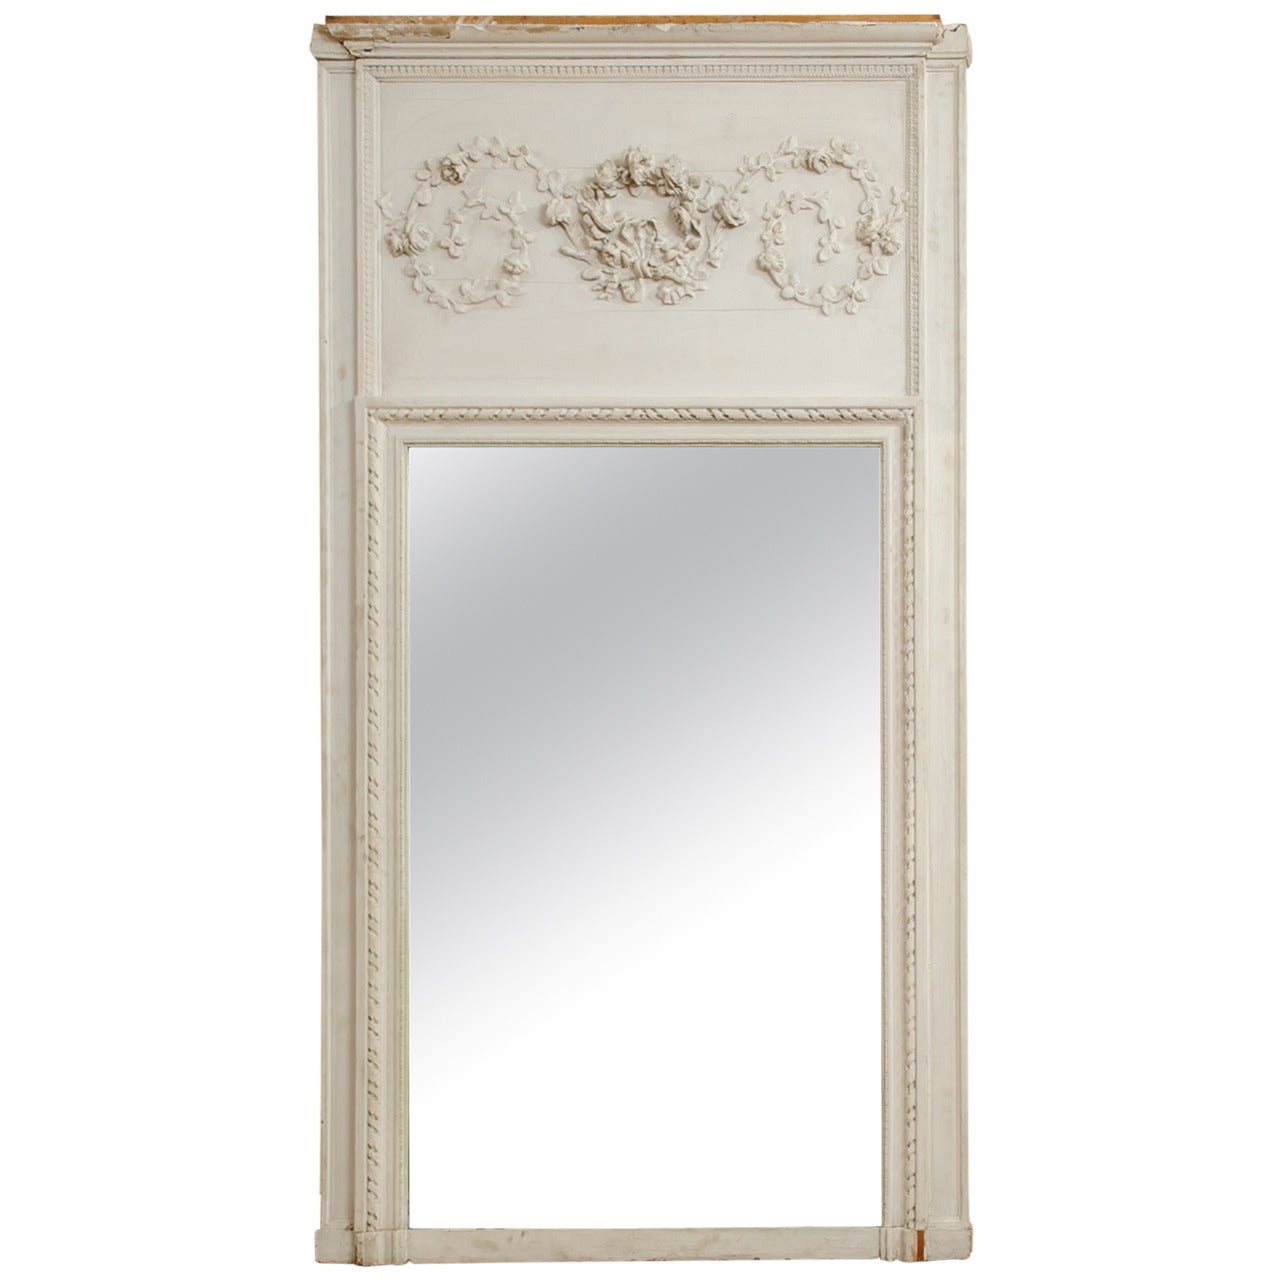 !8th Century Louis XVI Trumeau Mirror #2, France